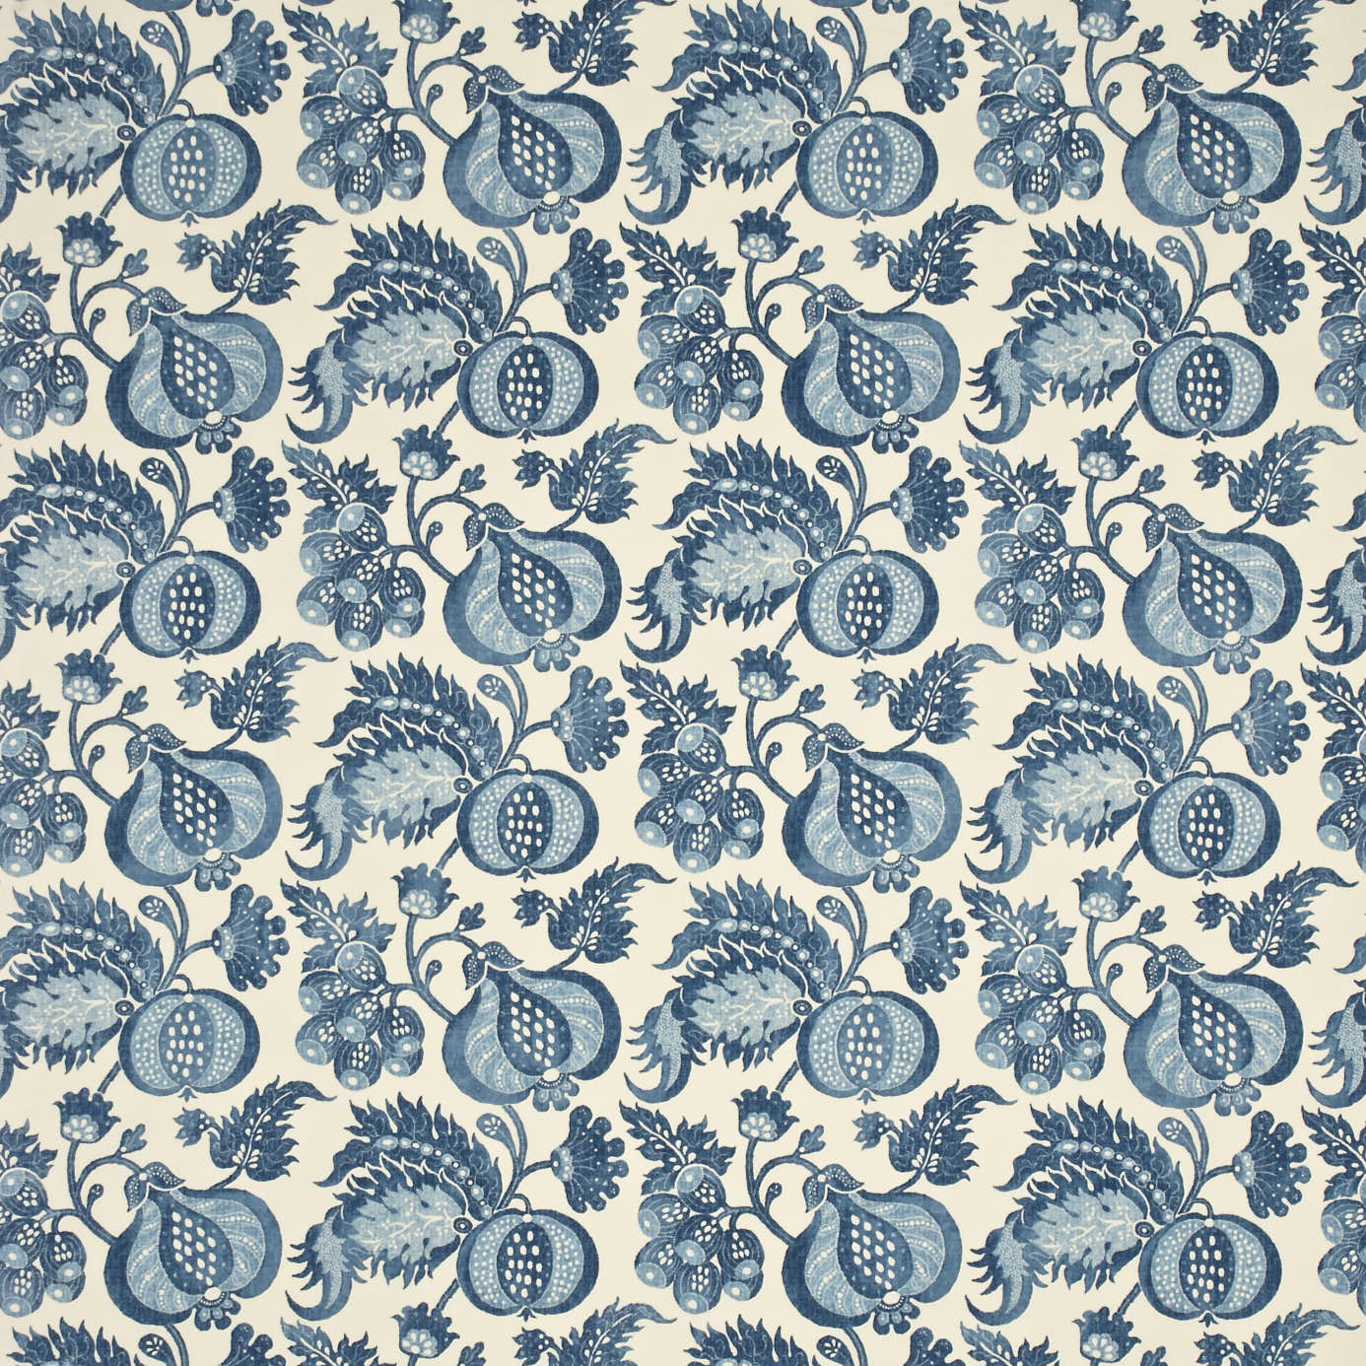 China Blue Fabric by Sanderson - DPEMCH204 - Indigo/Neutral